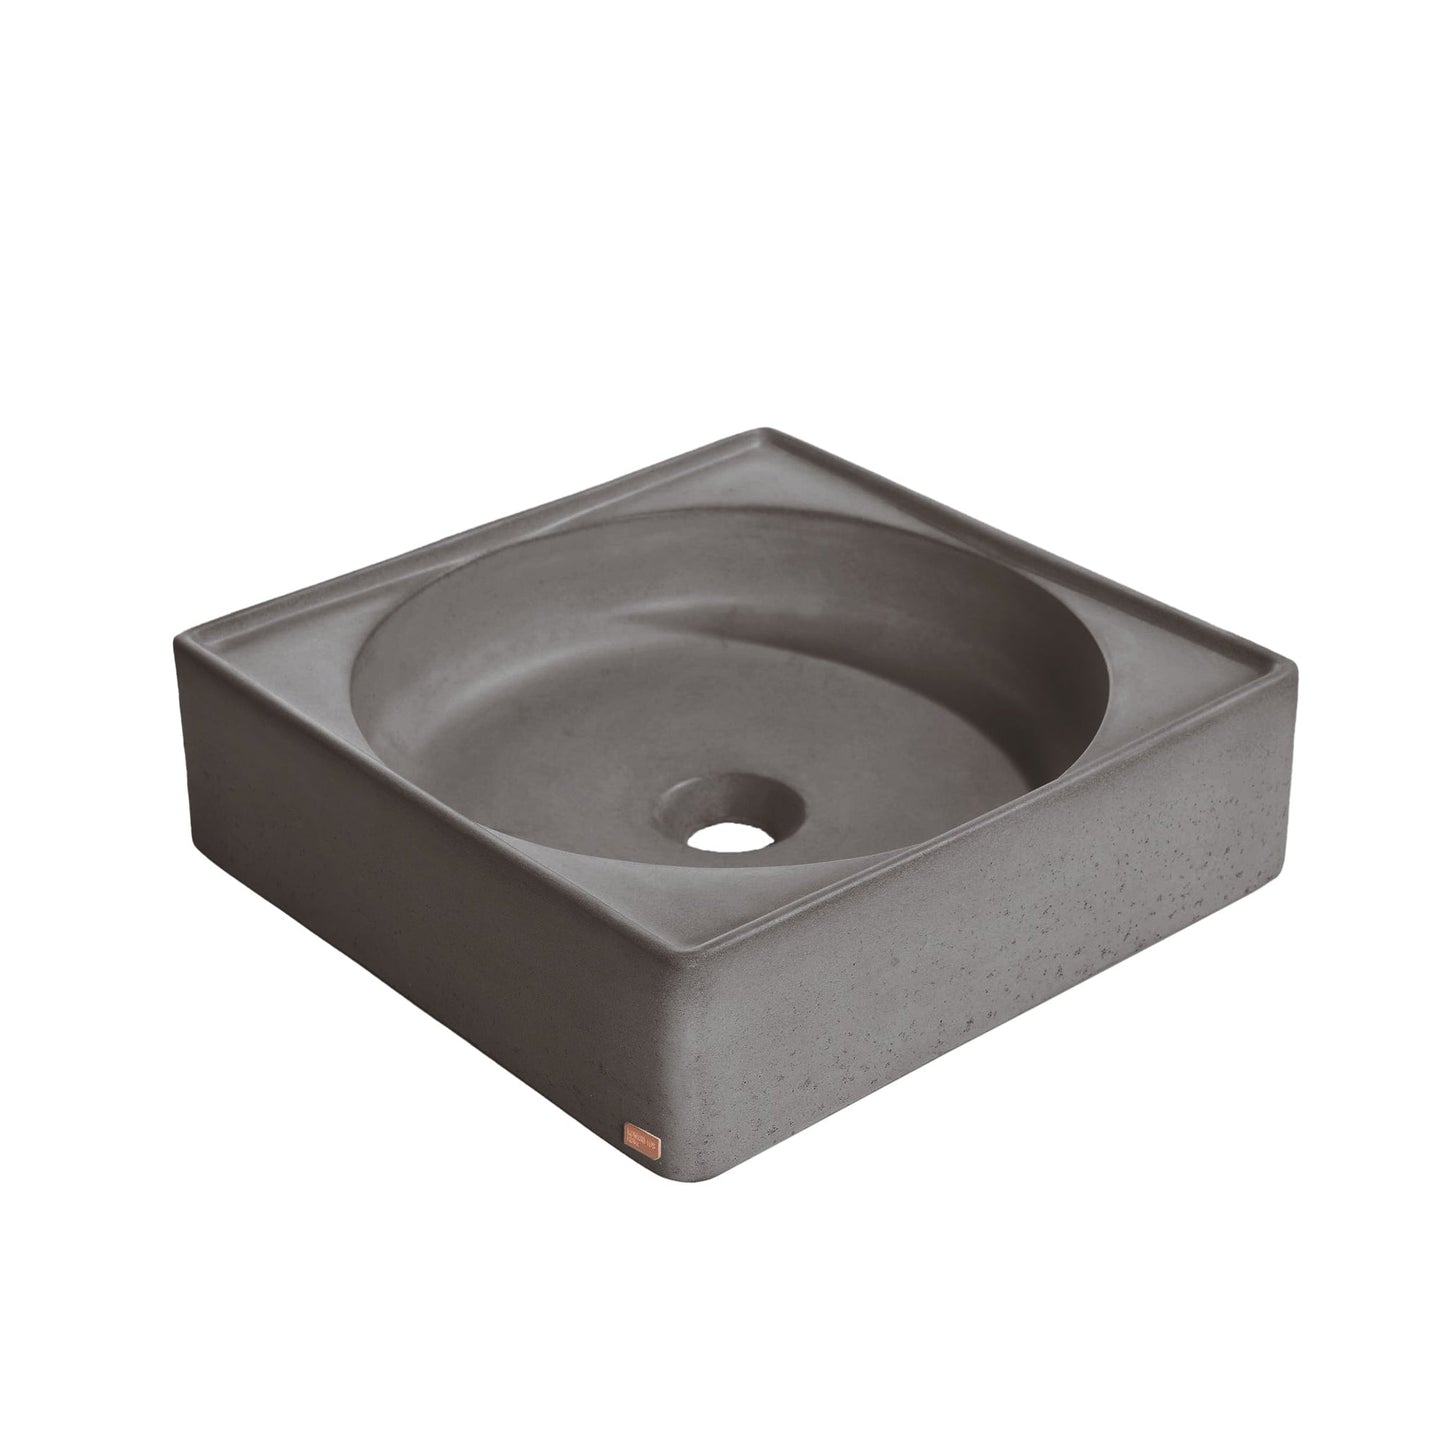 Konkretus Selv01 15" Volcanic Gray Top Mount Square Vessel Concrete Bathroom Sink